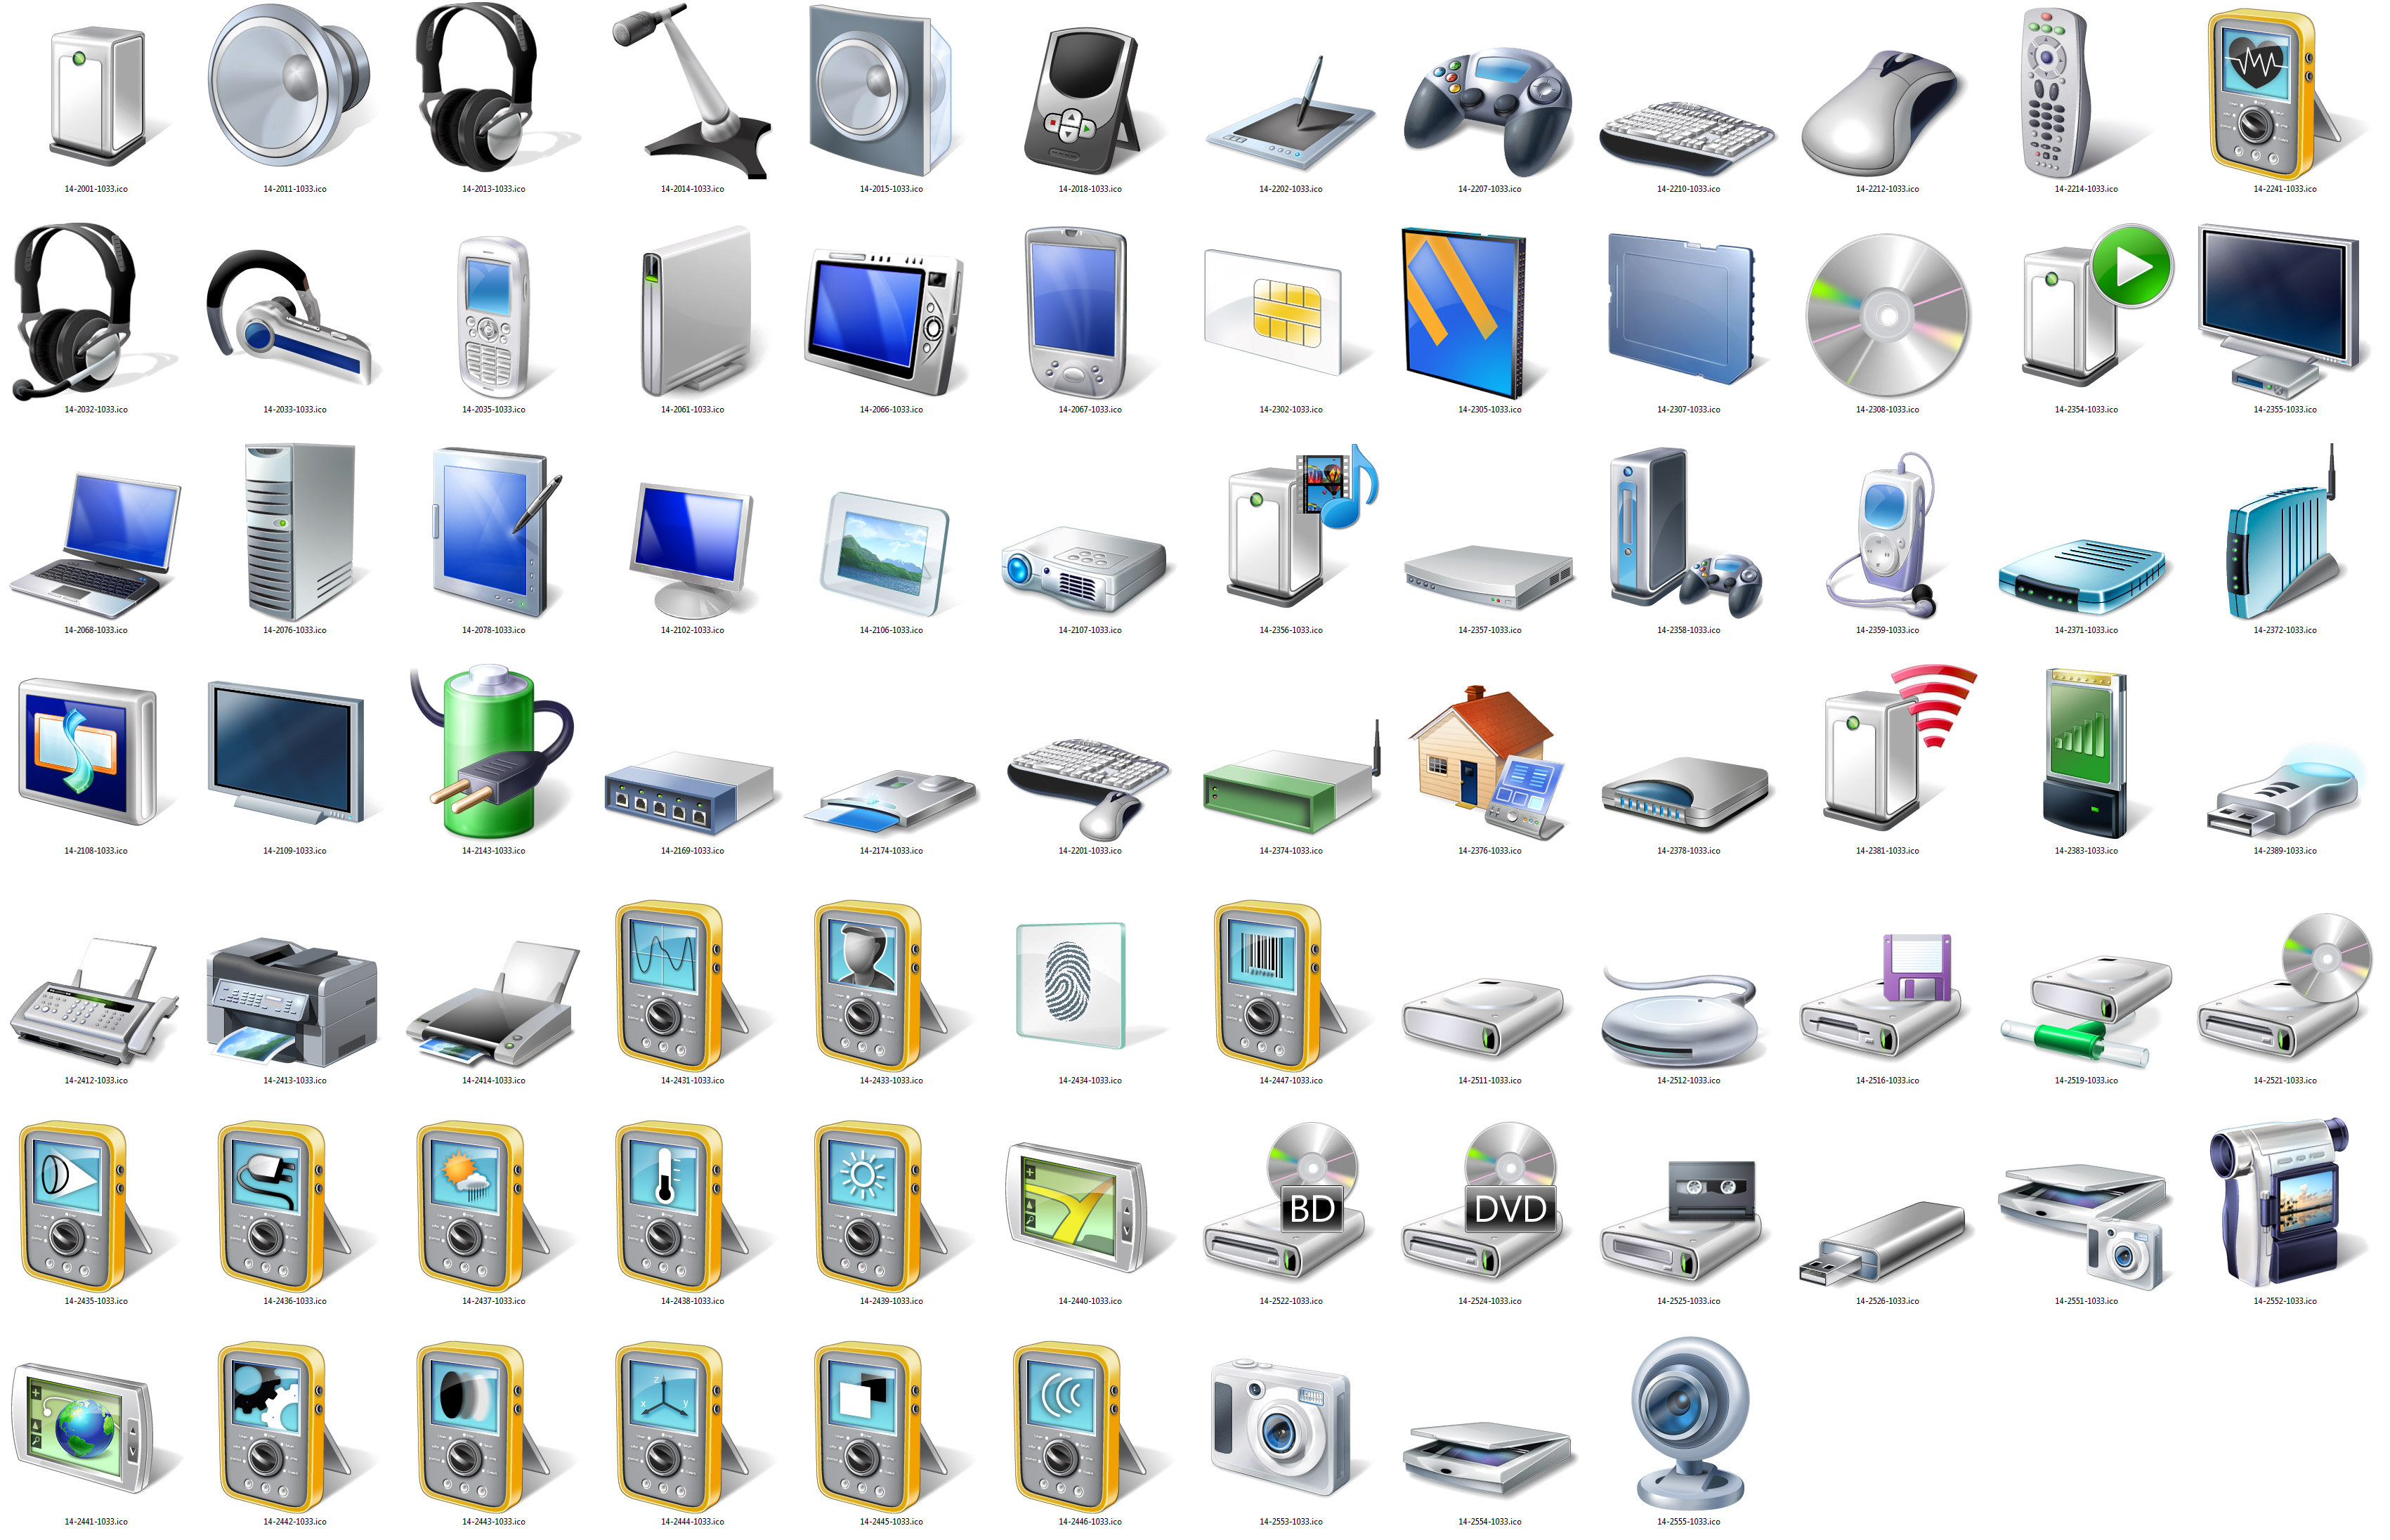 Windows 7 icons. Иконка компьютера с Windows 10 для виндовс 7. Значок виндовс 7. Иконки виндовс 10 для виндовс 7. Значки для иконок Windows 10.